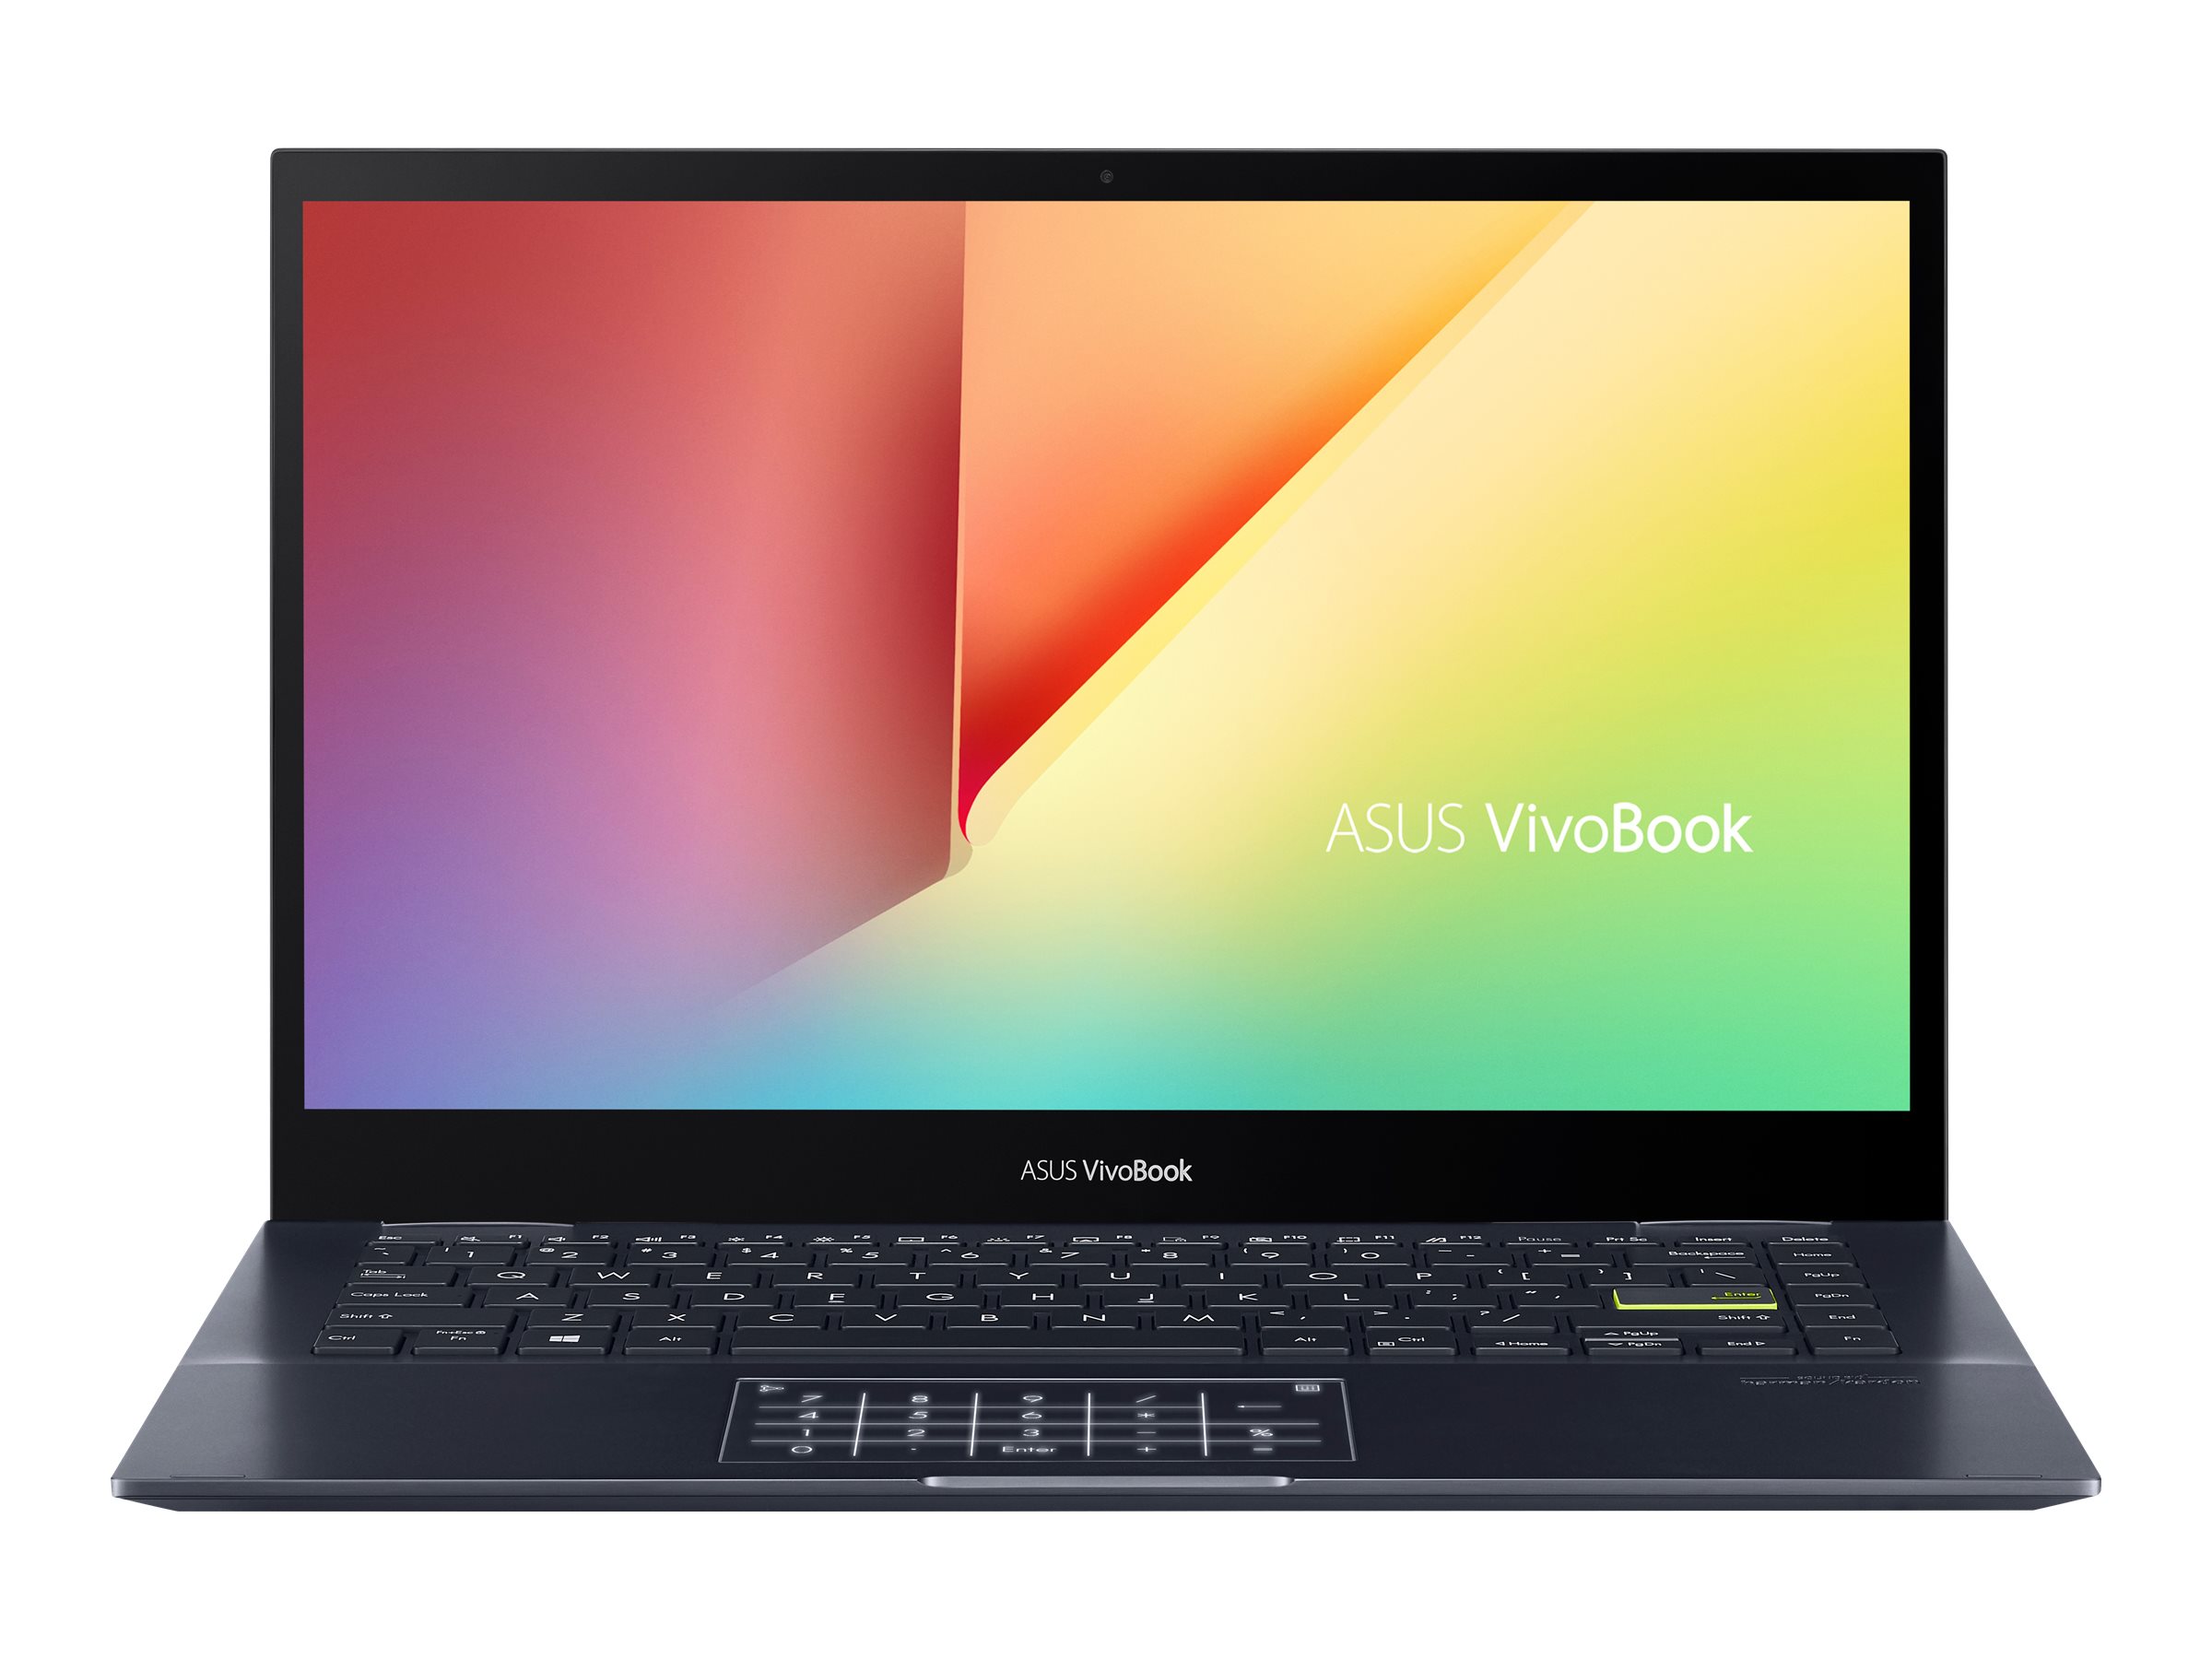 ASUS VivoBook Flip 14 TM420IA XB51T - Flip design - AMD Ryzen 5 4500U / 2.3 GHz - Win 10 Pro 64-bit - Radeon Graphics - 8 GB RAM - 256 GB SSD NVMe - 14" touchscreen 1920 x 1080 (Full HD) - Wi-Fi 5 - bespoke black - with 1 year Domestic ADP with product registration - image 5 of 13